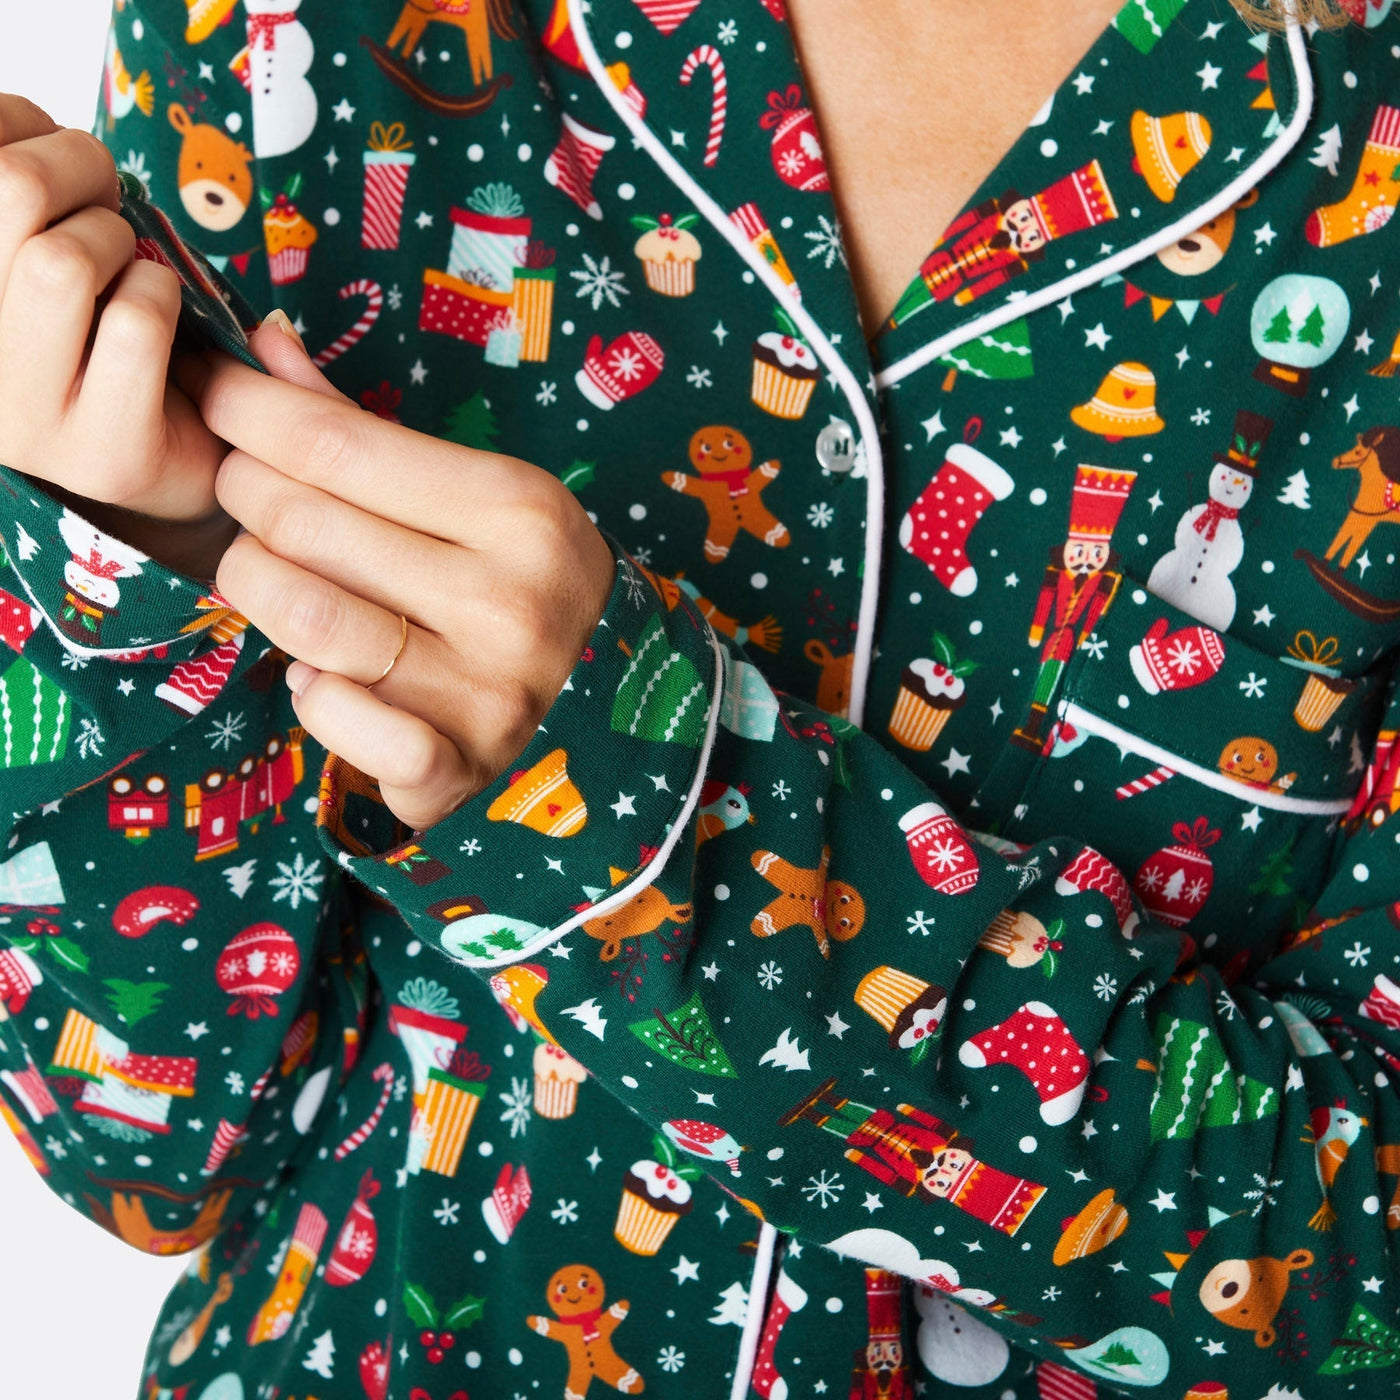 Women's Green Christmas Dream Collared Christmas Pyjamas